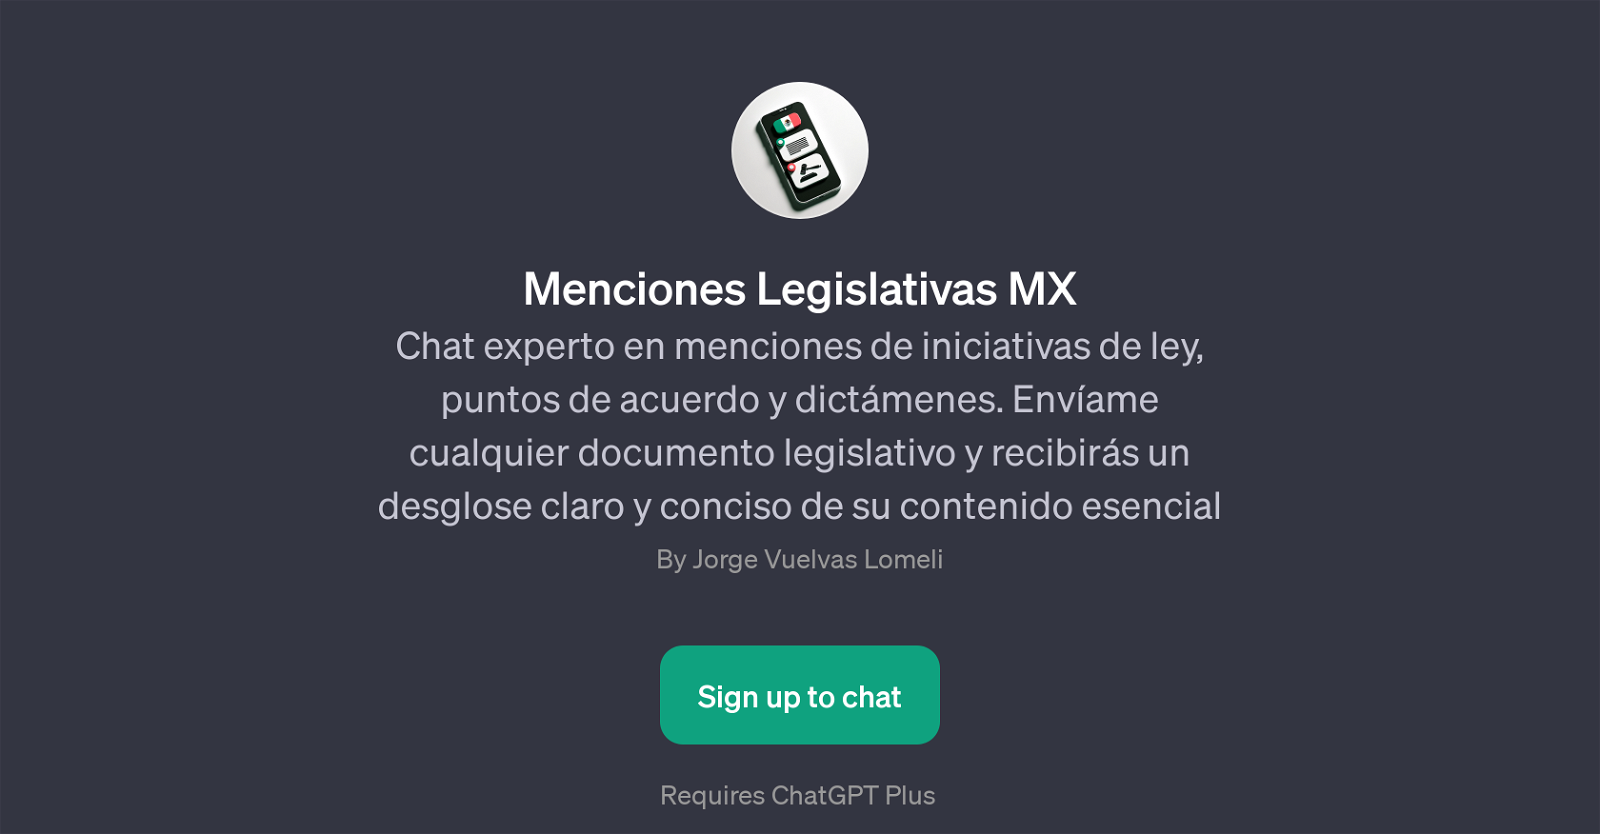 Menciones Legislativas MX website